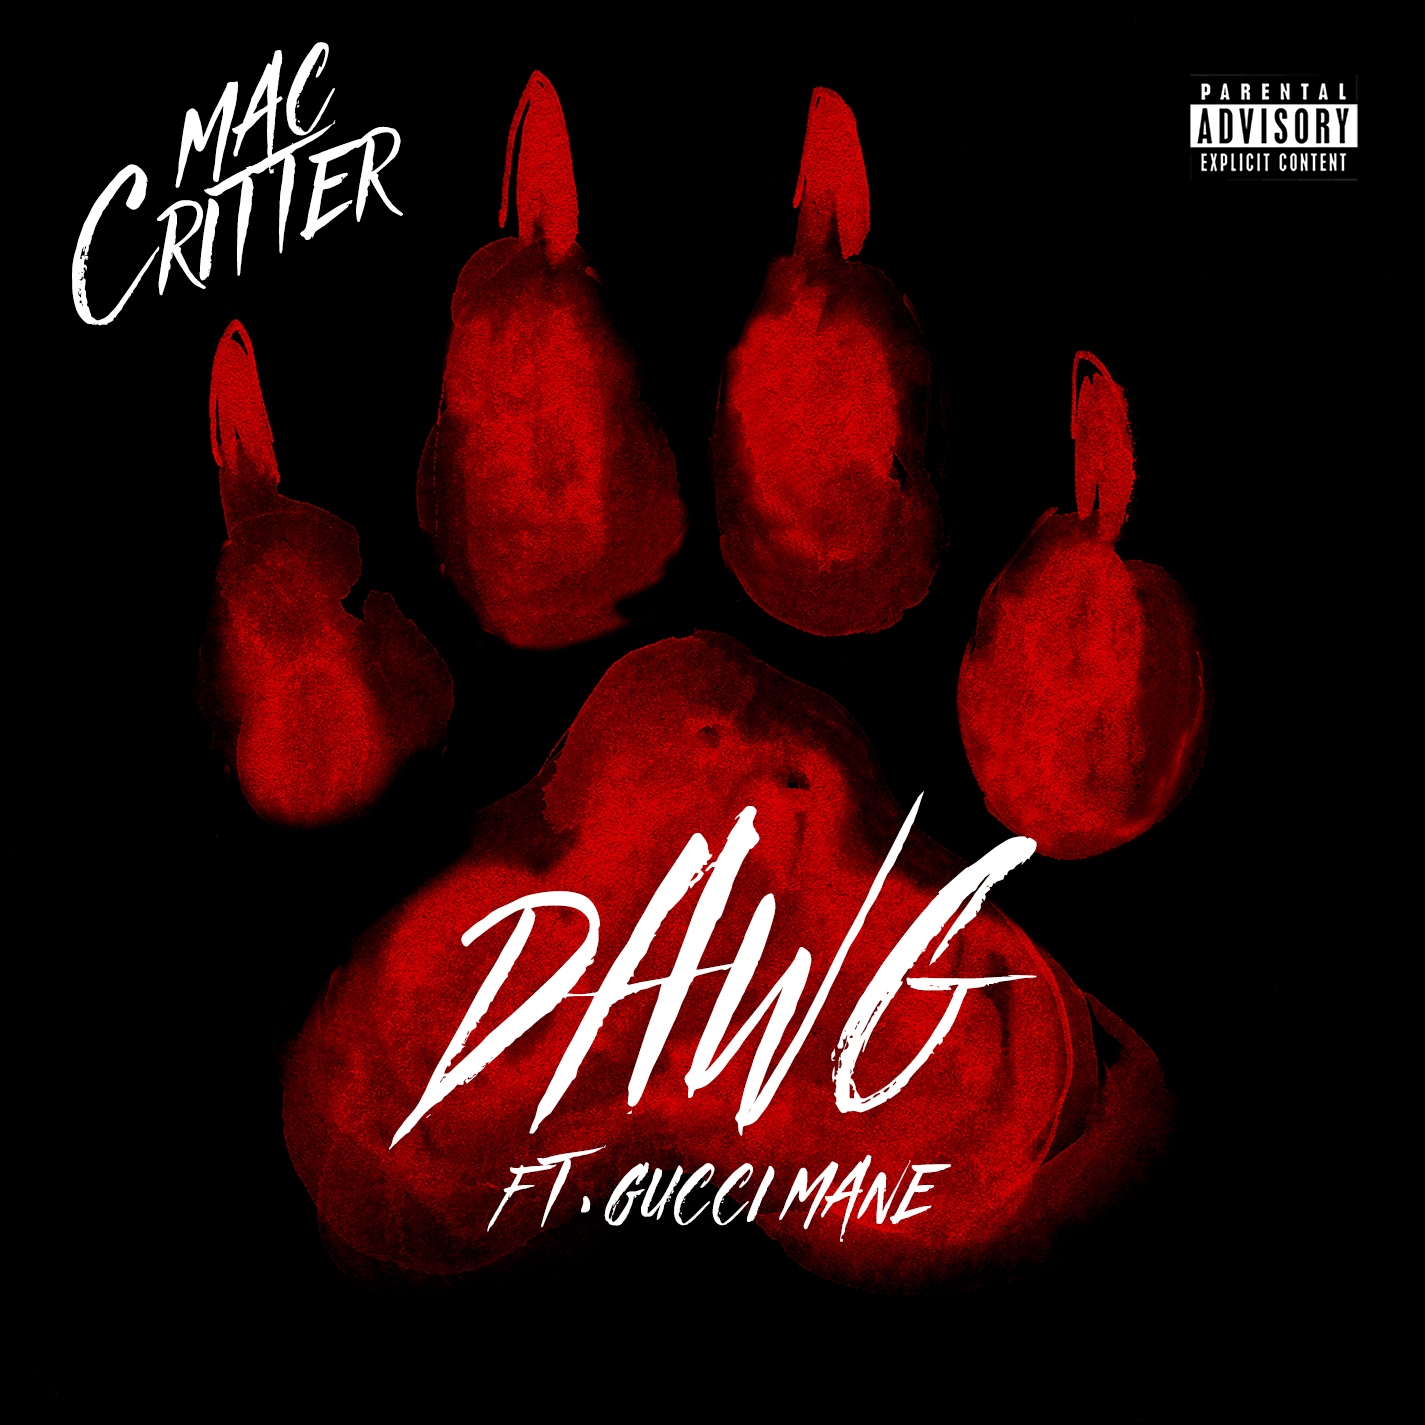 Mac Critter – DAWG (feat. Gucci Mane)